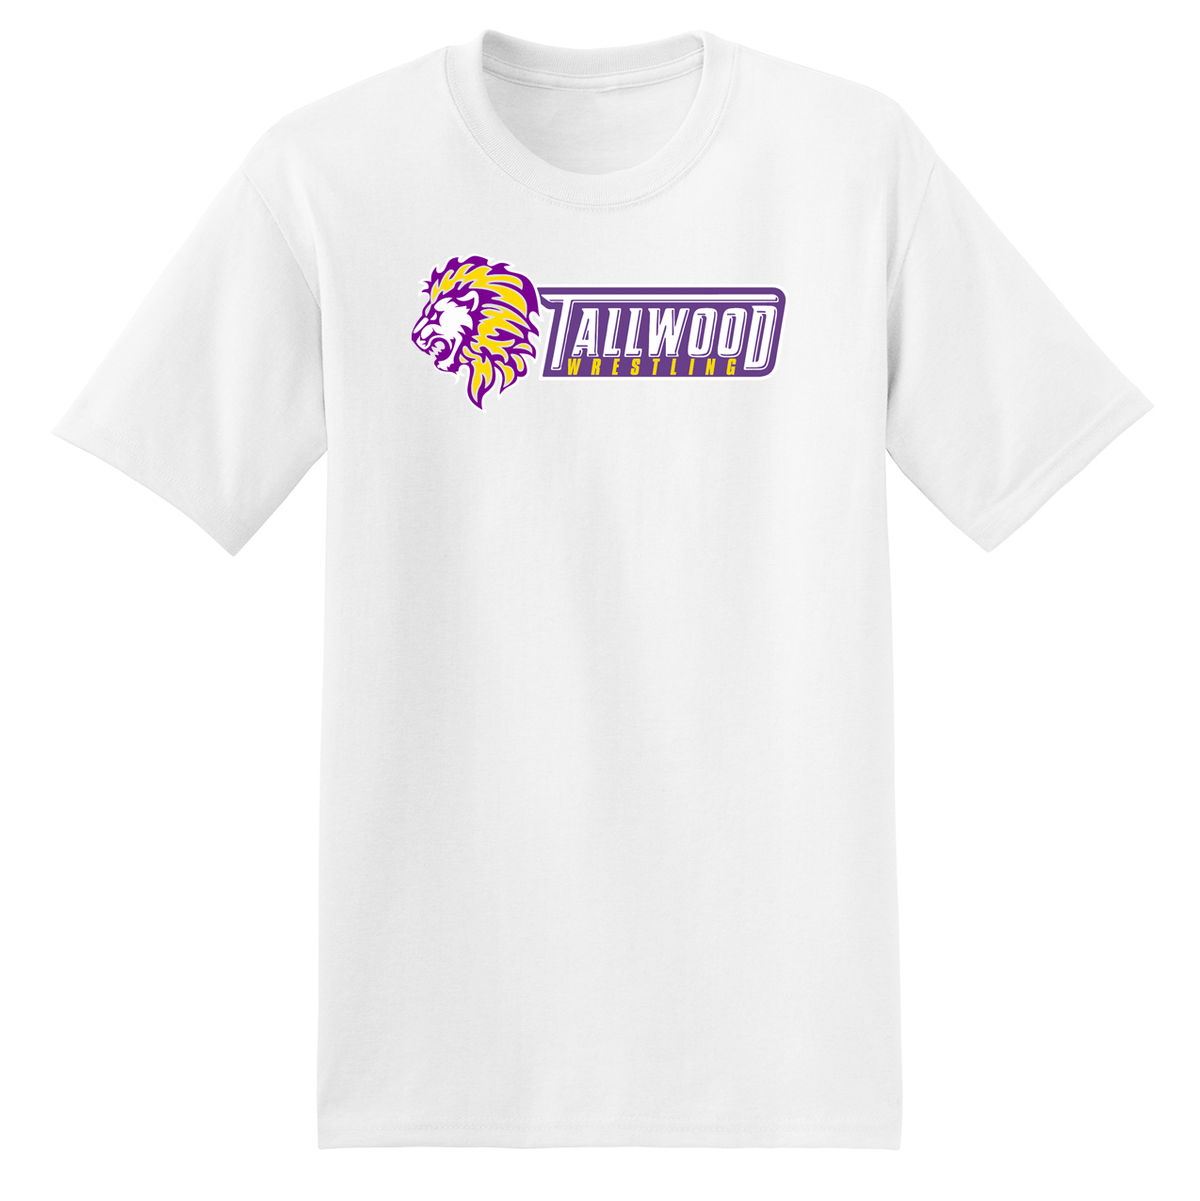 Tallwood Wrestling T-Shirt